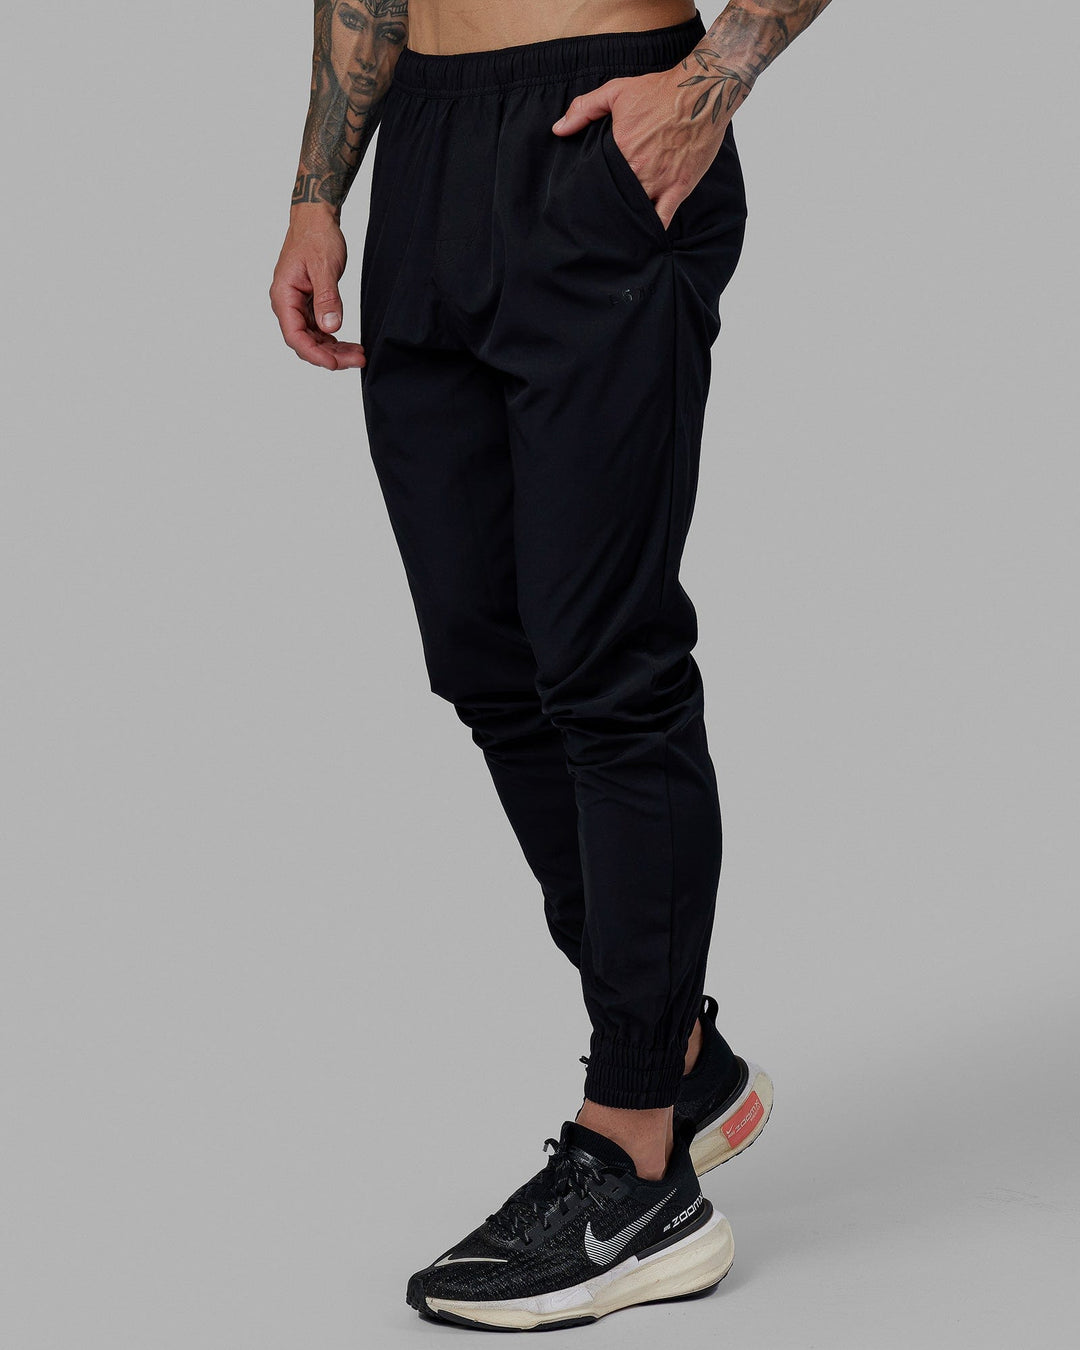 Man wearing Warm Up Zip Cuff Performance Pant - Black